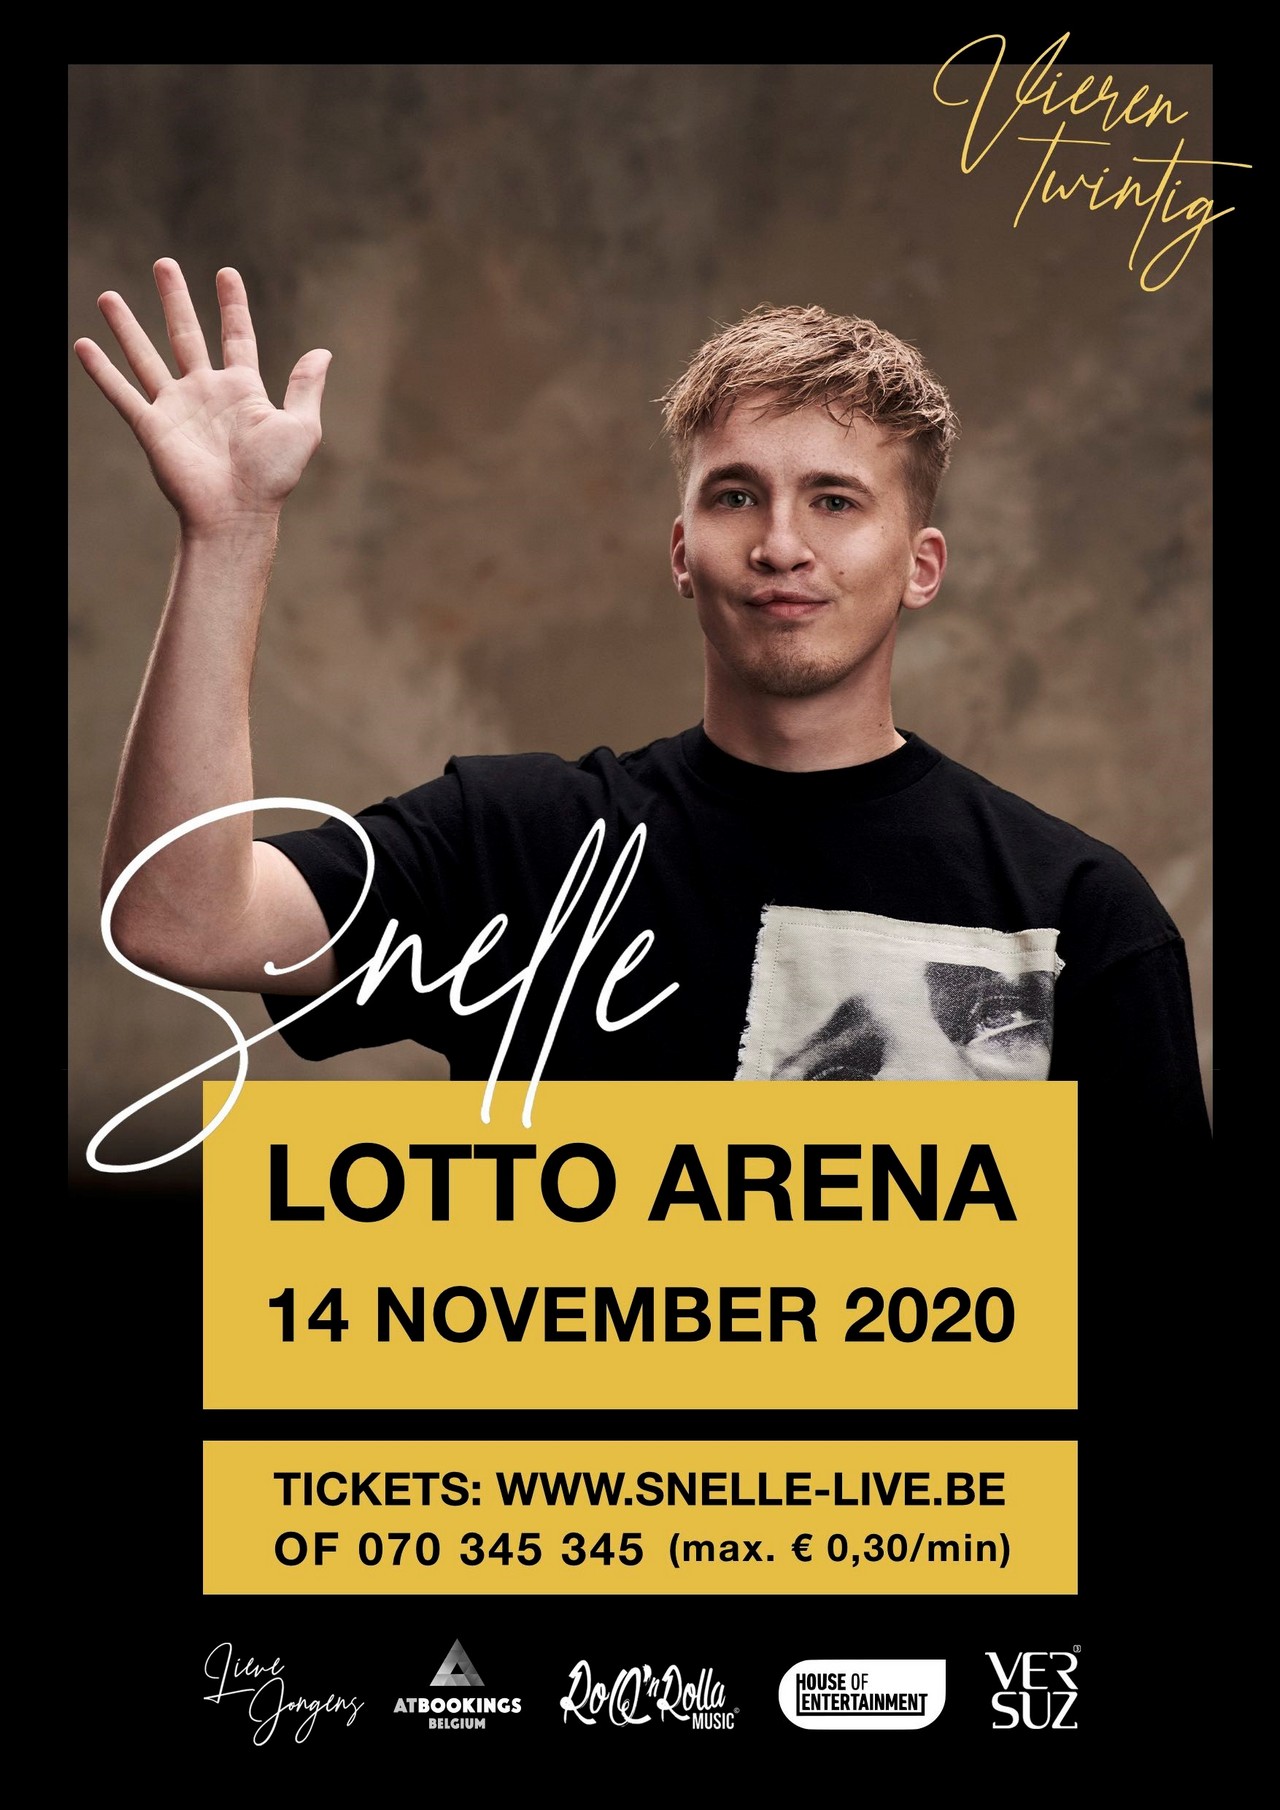 Razend populaire Snelle concerteert op 14 november in de Lotto Arena - Affiche Snelle Lotto Arena